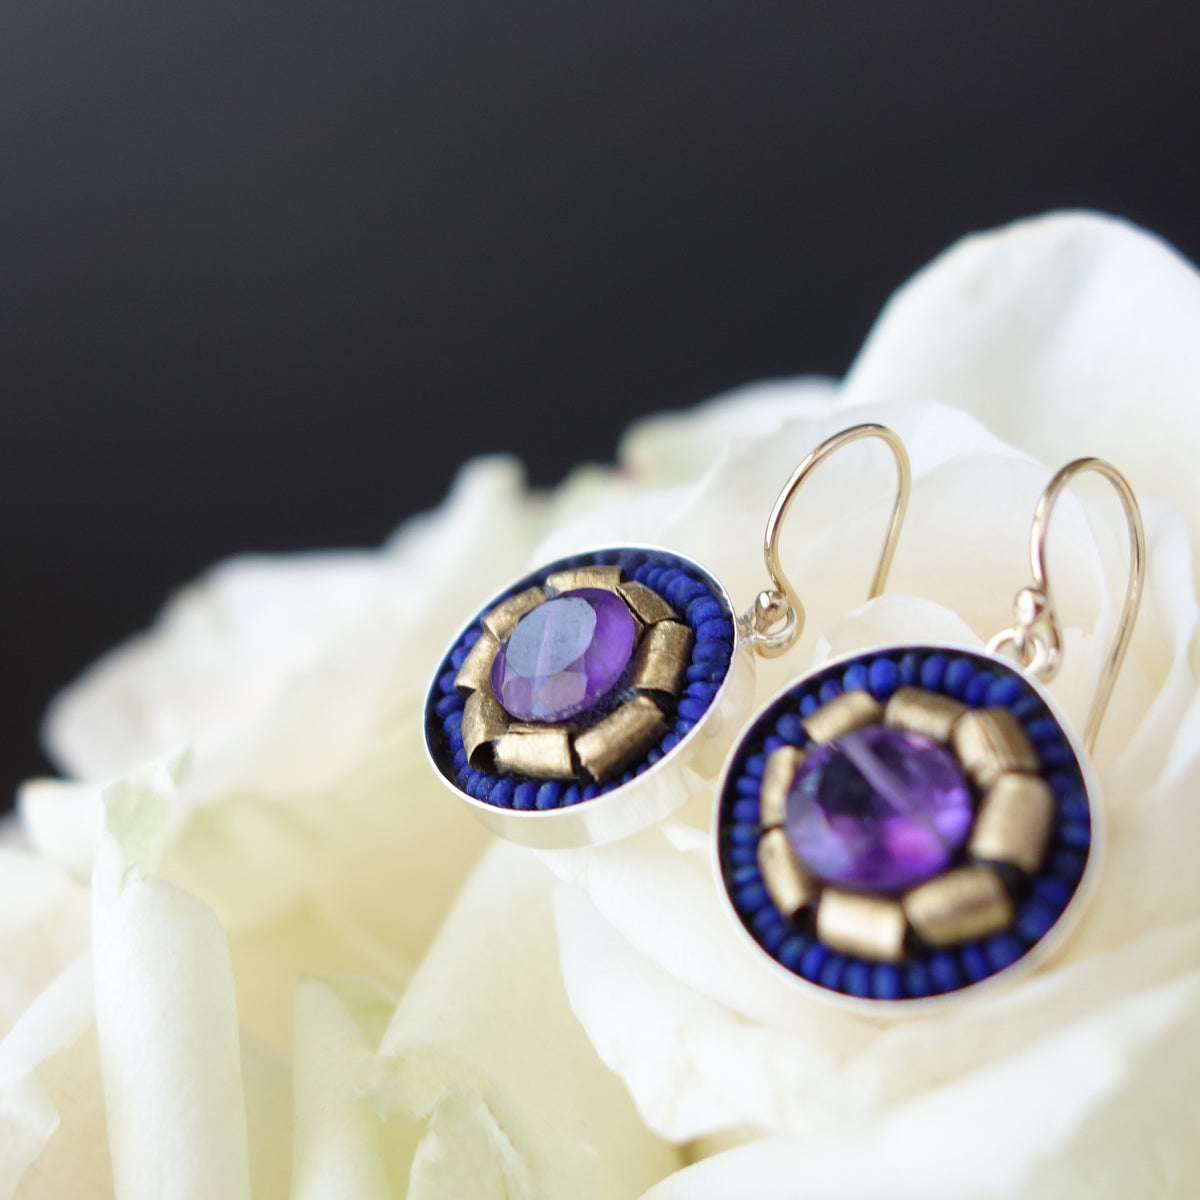 Amethyst, Gold, and Lapis Lazuli mosaic earring